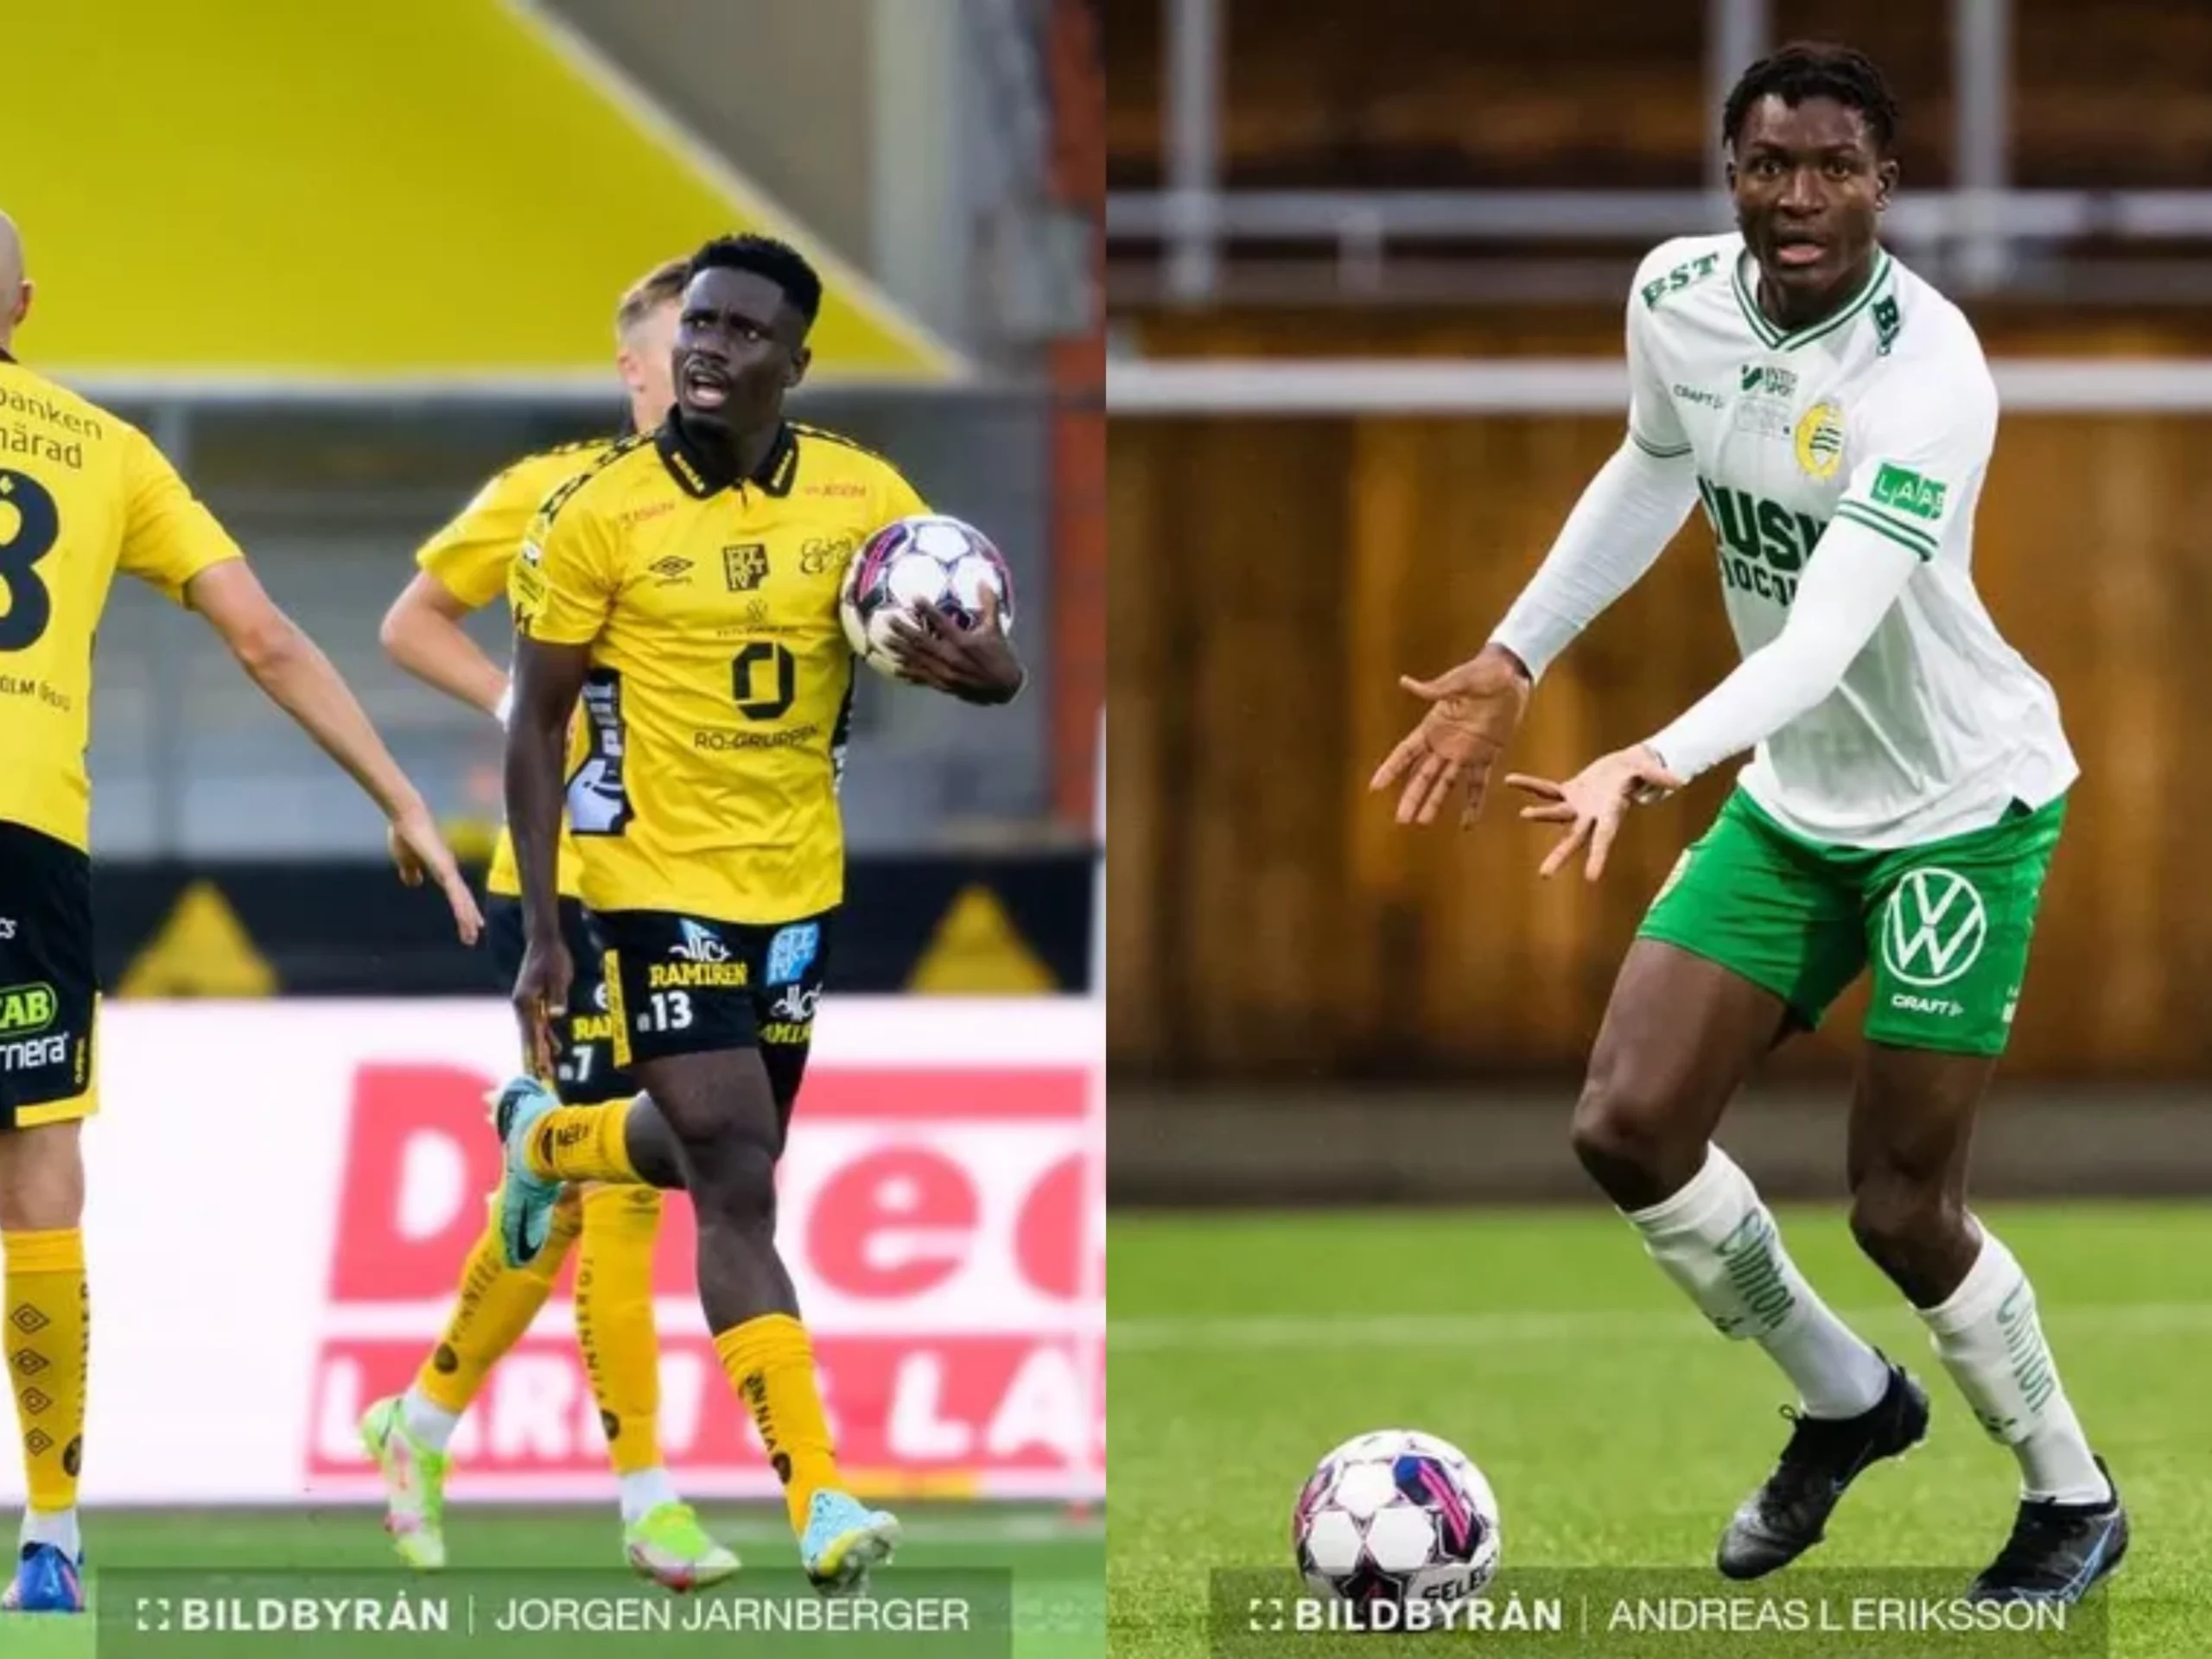 Michael Baidoo and Nathaniel Adjei named in Swedish Allsvenskan team of the week